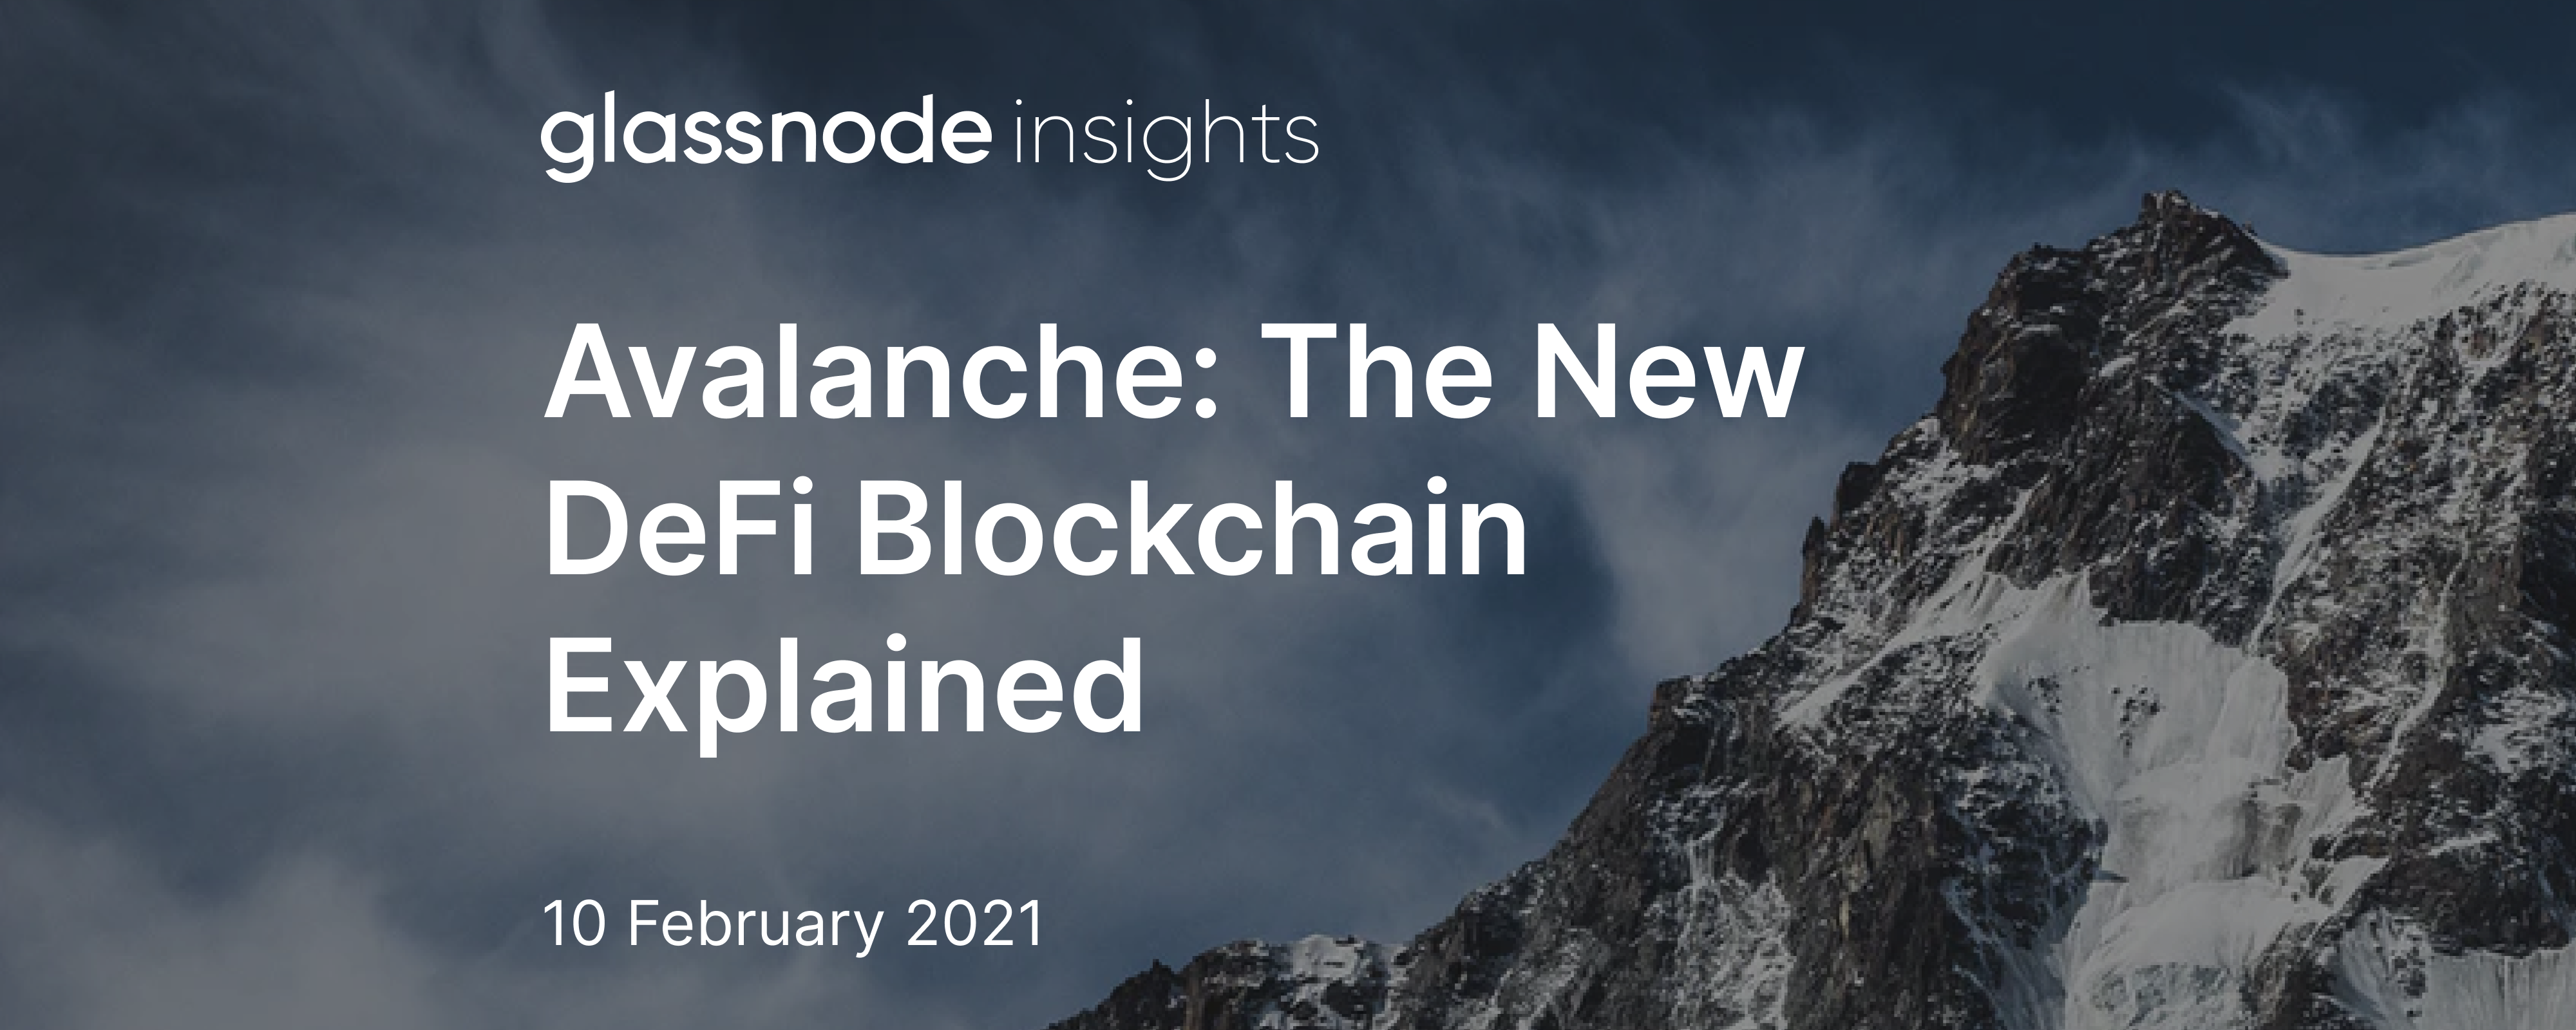 Avalanche: The New DeFi Blockchain Explained